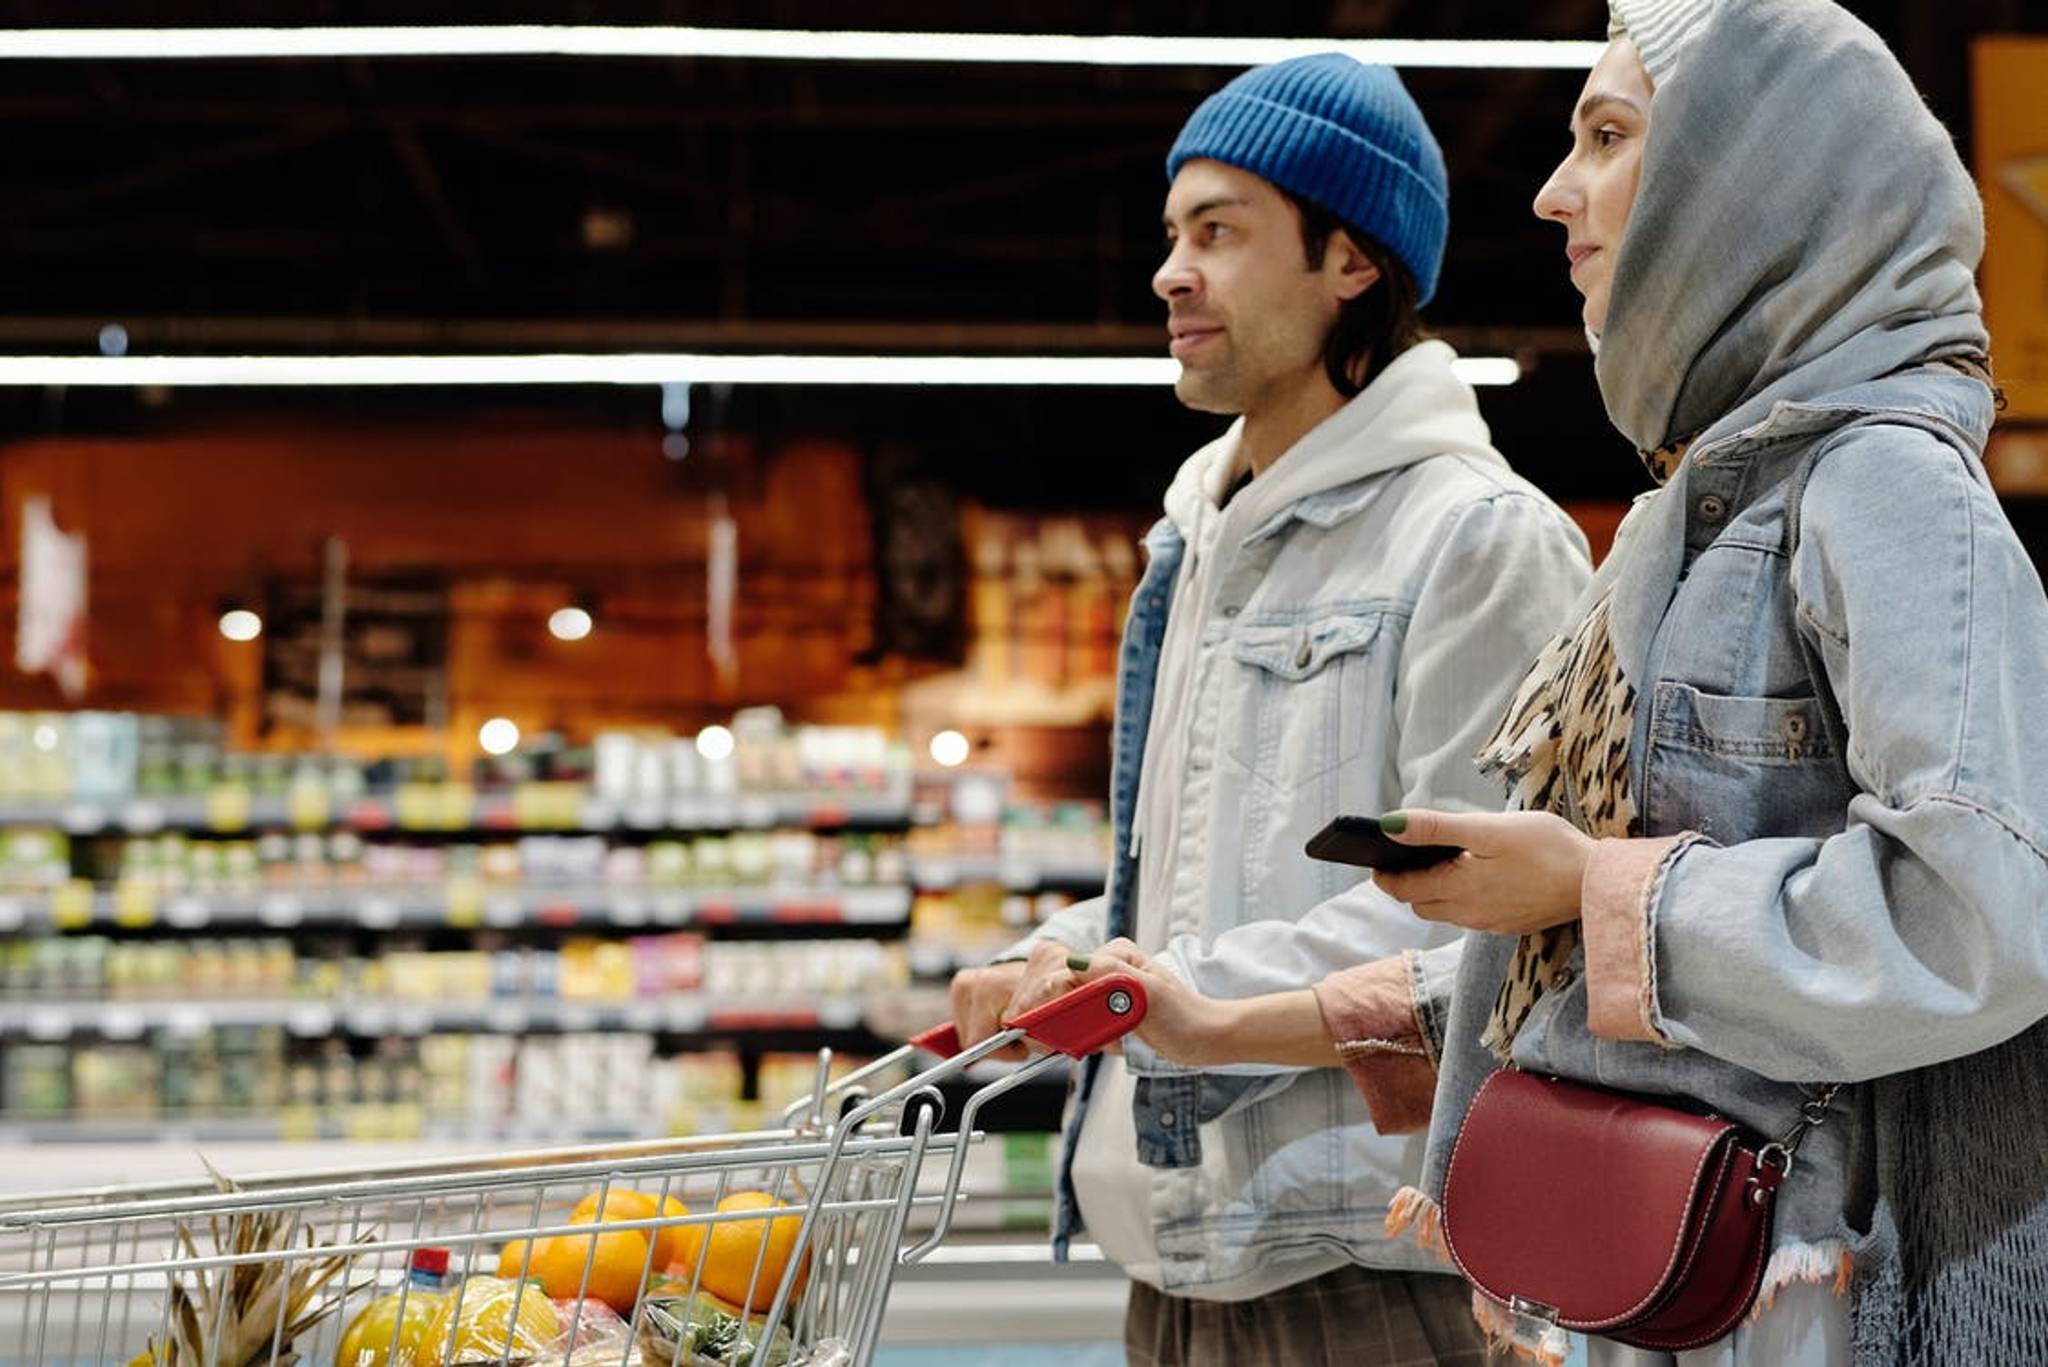 Ubamarket app simplifies deals for grocery shoppers